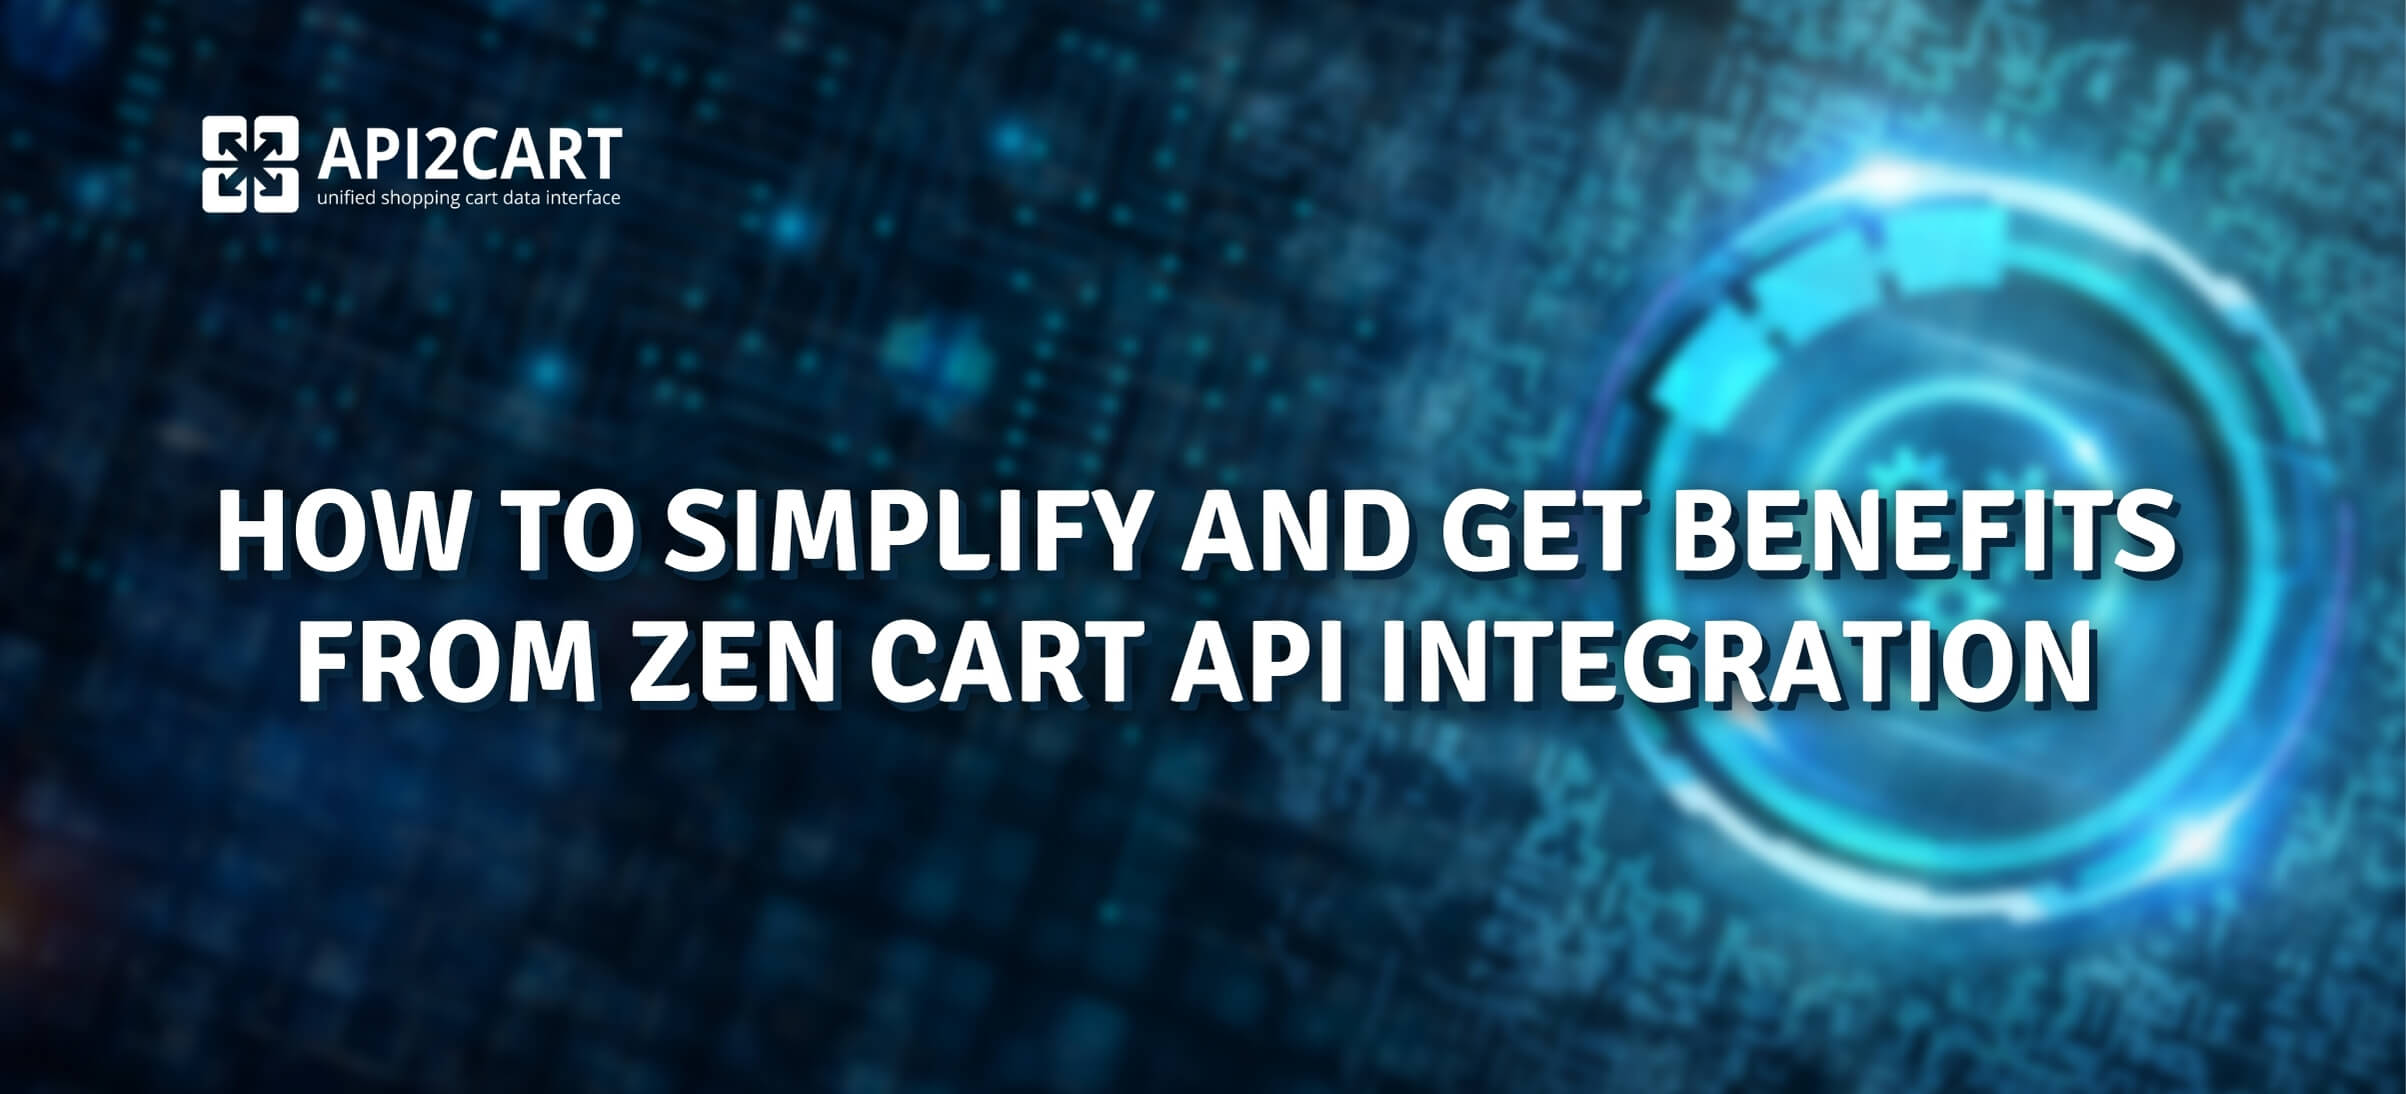 Zen Cart API Integration